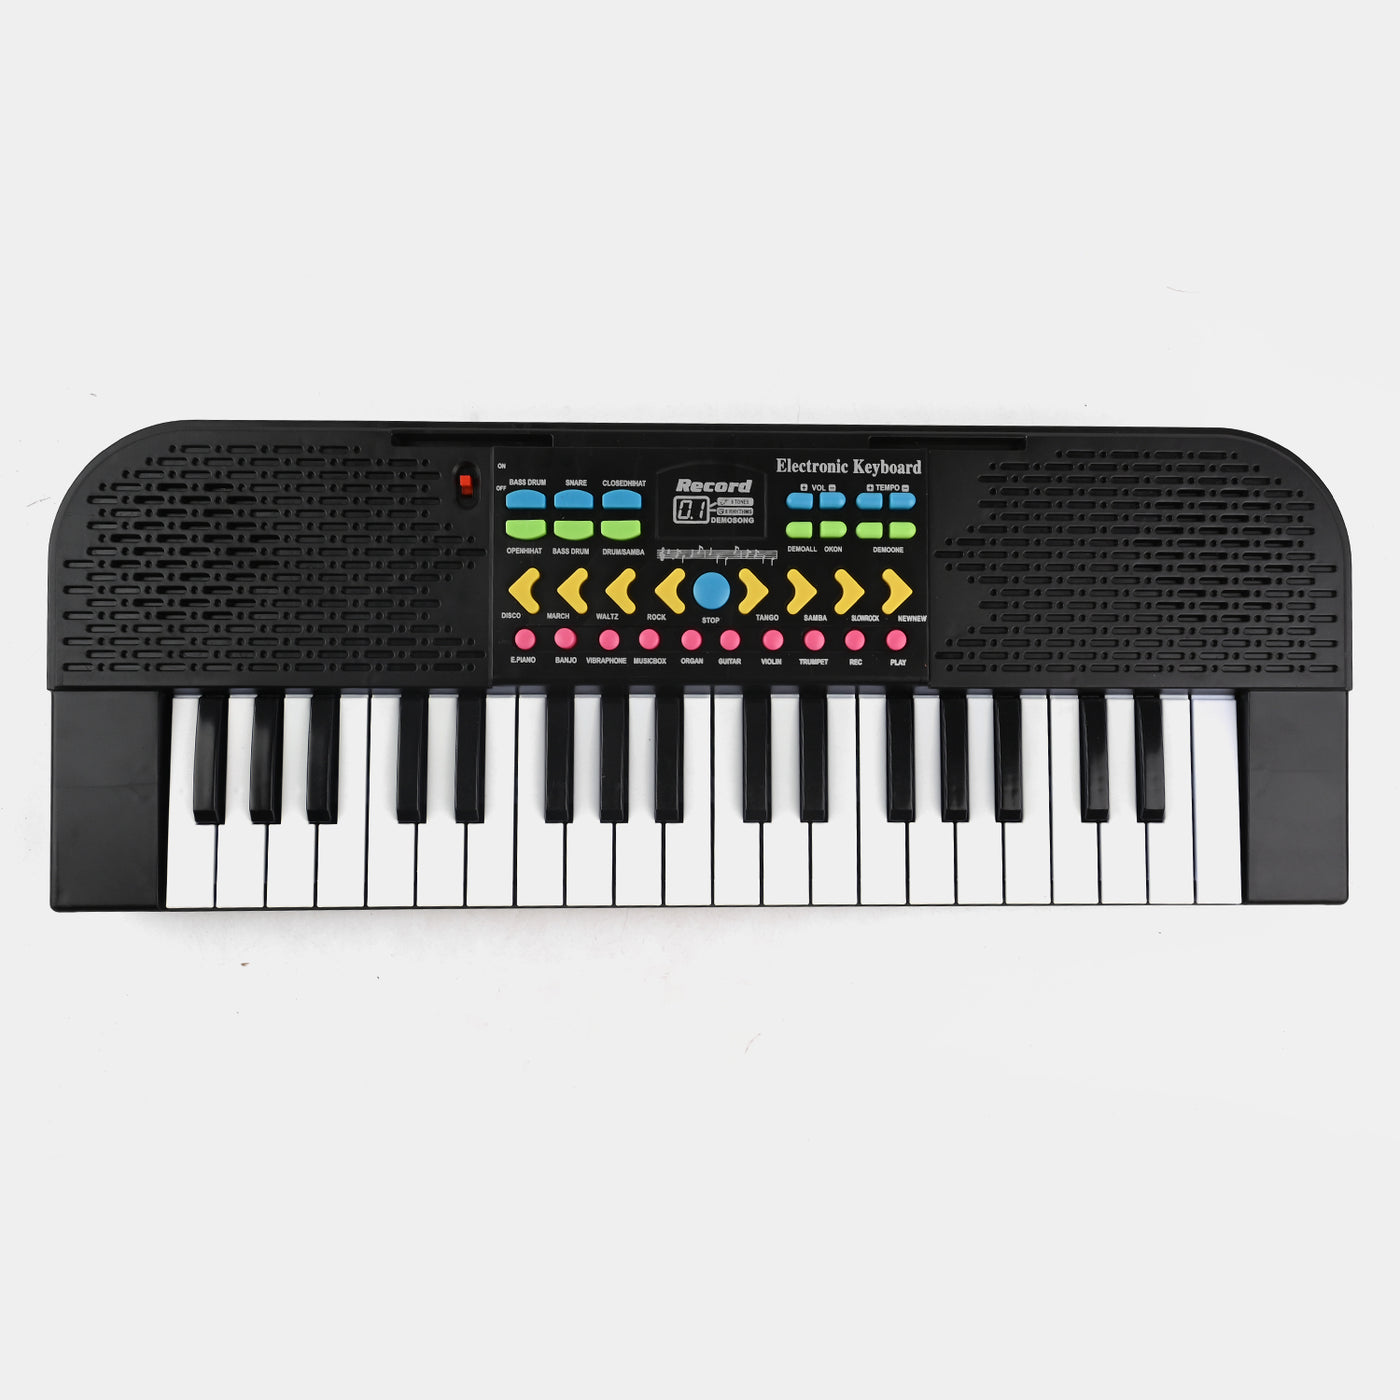 37 Key Electronic Musical Keyboard For Kids